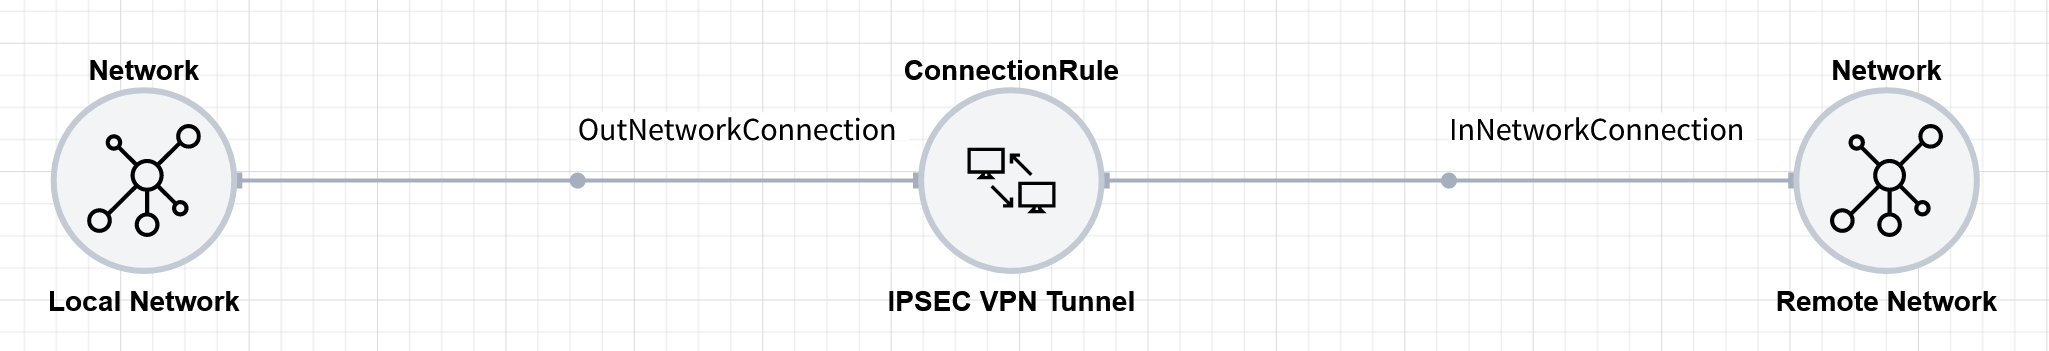 IPSEC-based VPN Tunnel between two networks.